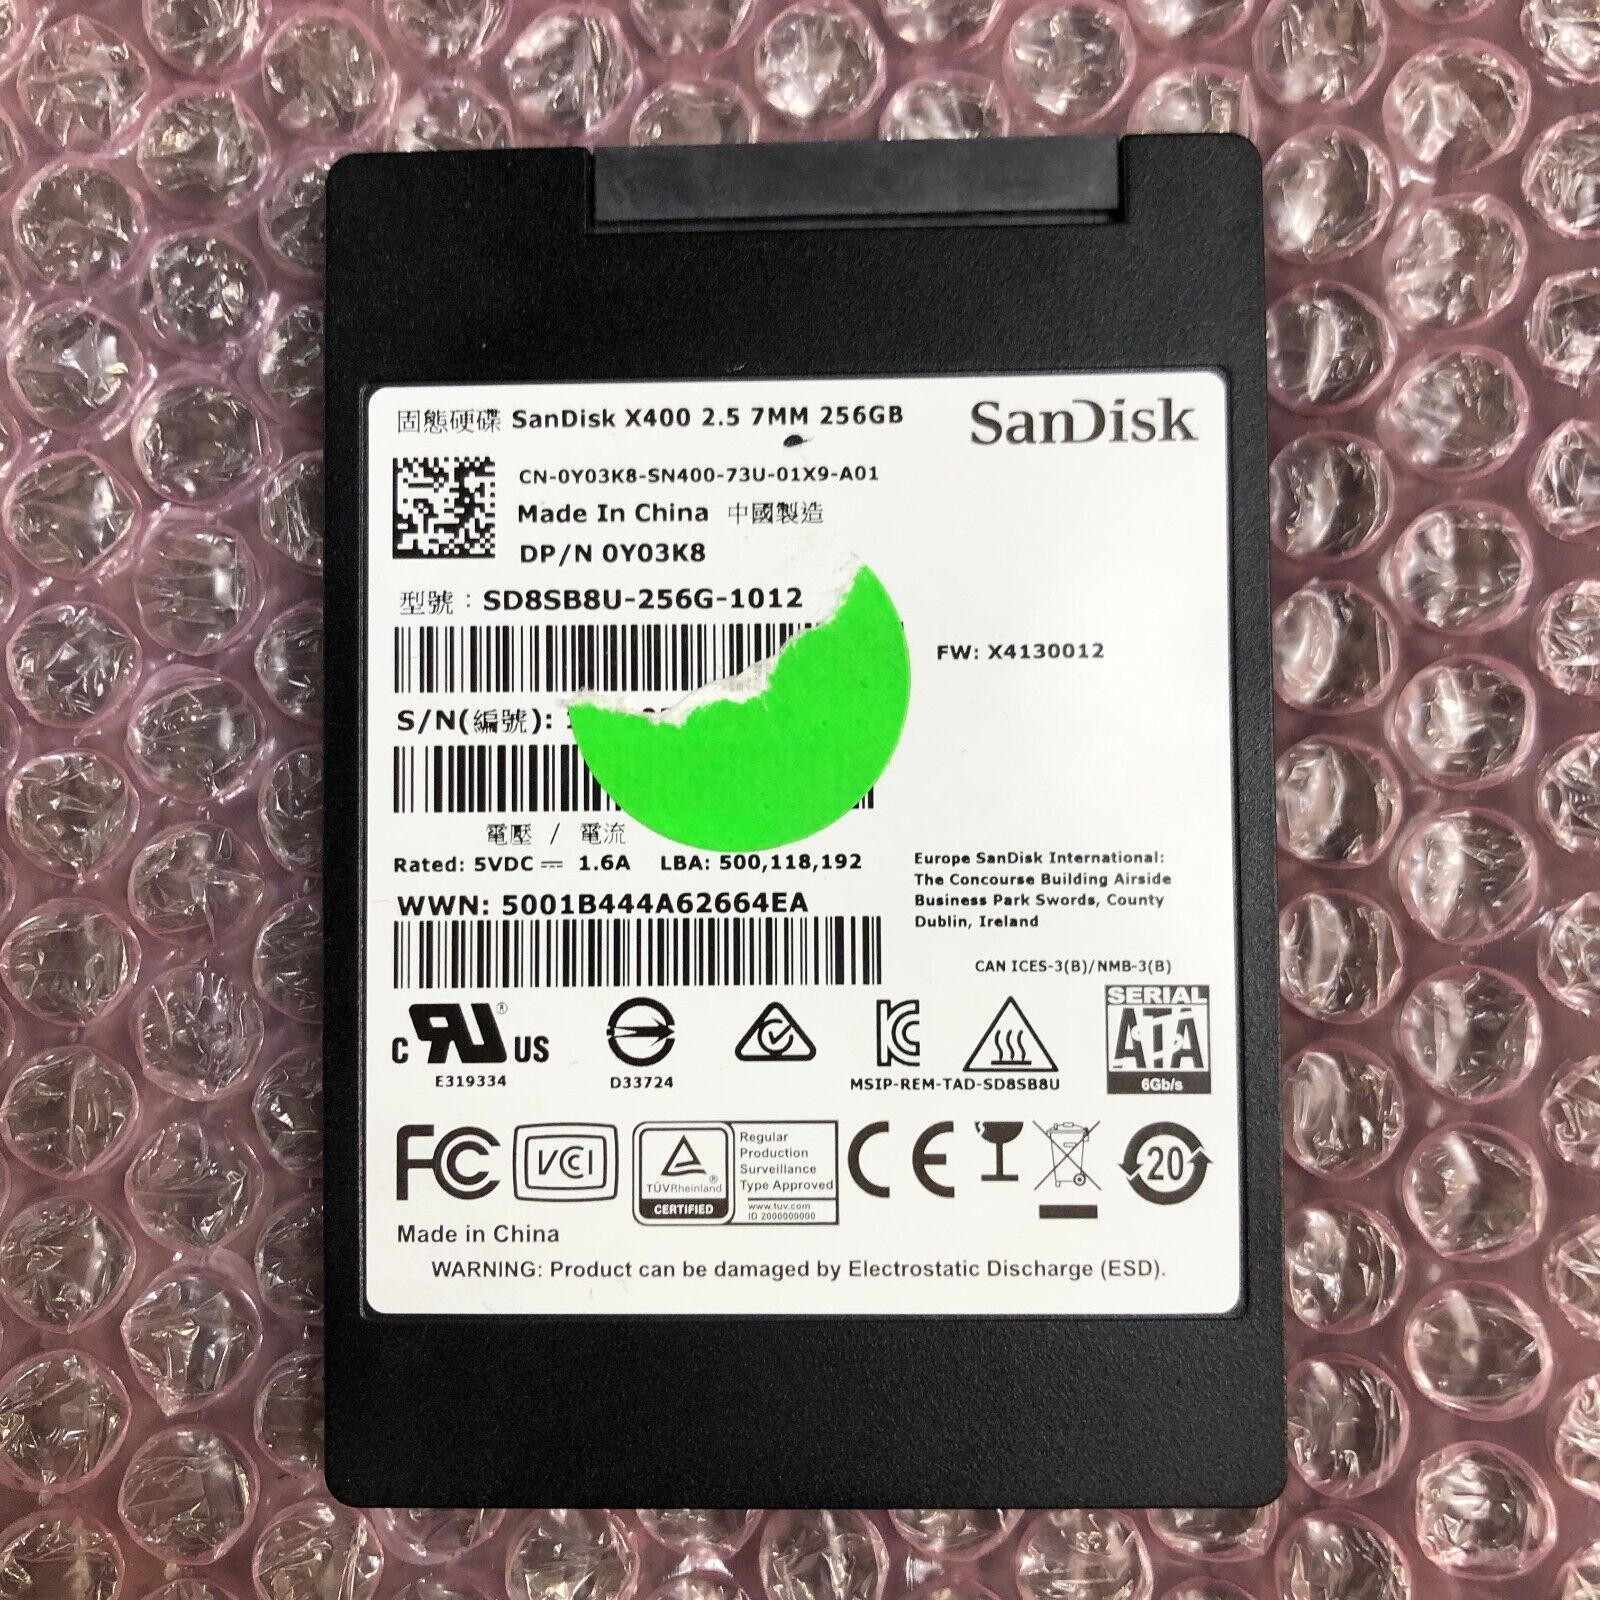 SanDisk X400 2.5 7MM 256GB Internal SDD #SD8SB8U-256G-1012